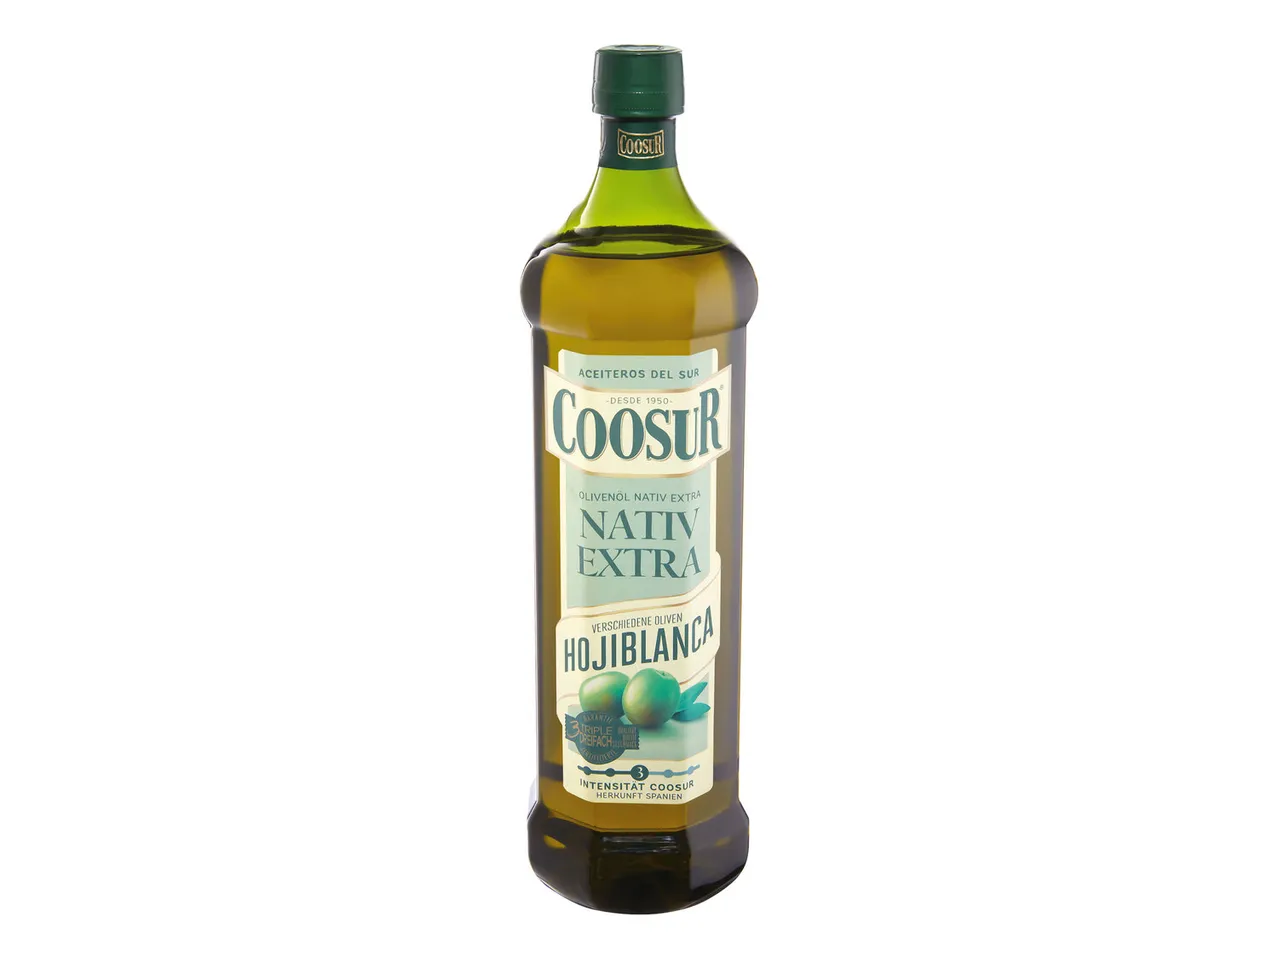 Coosur Hojiblanca Olivenöl | 